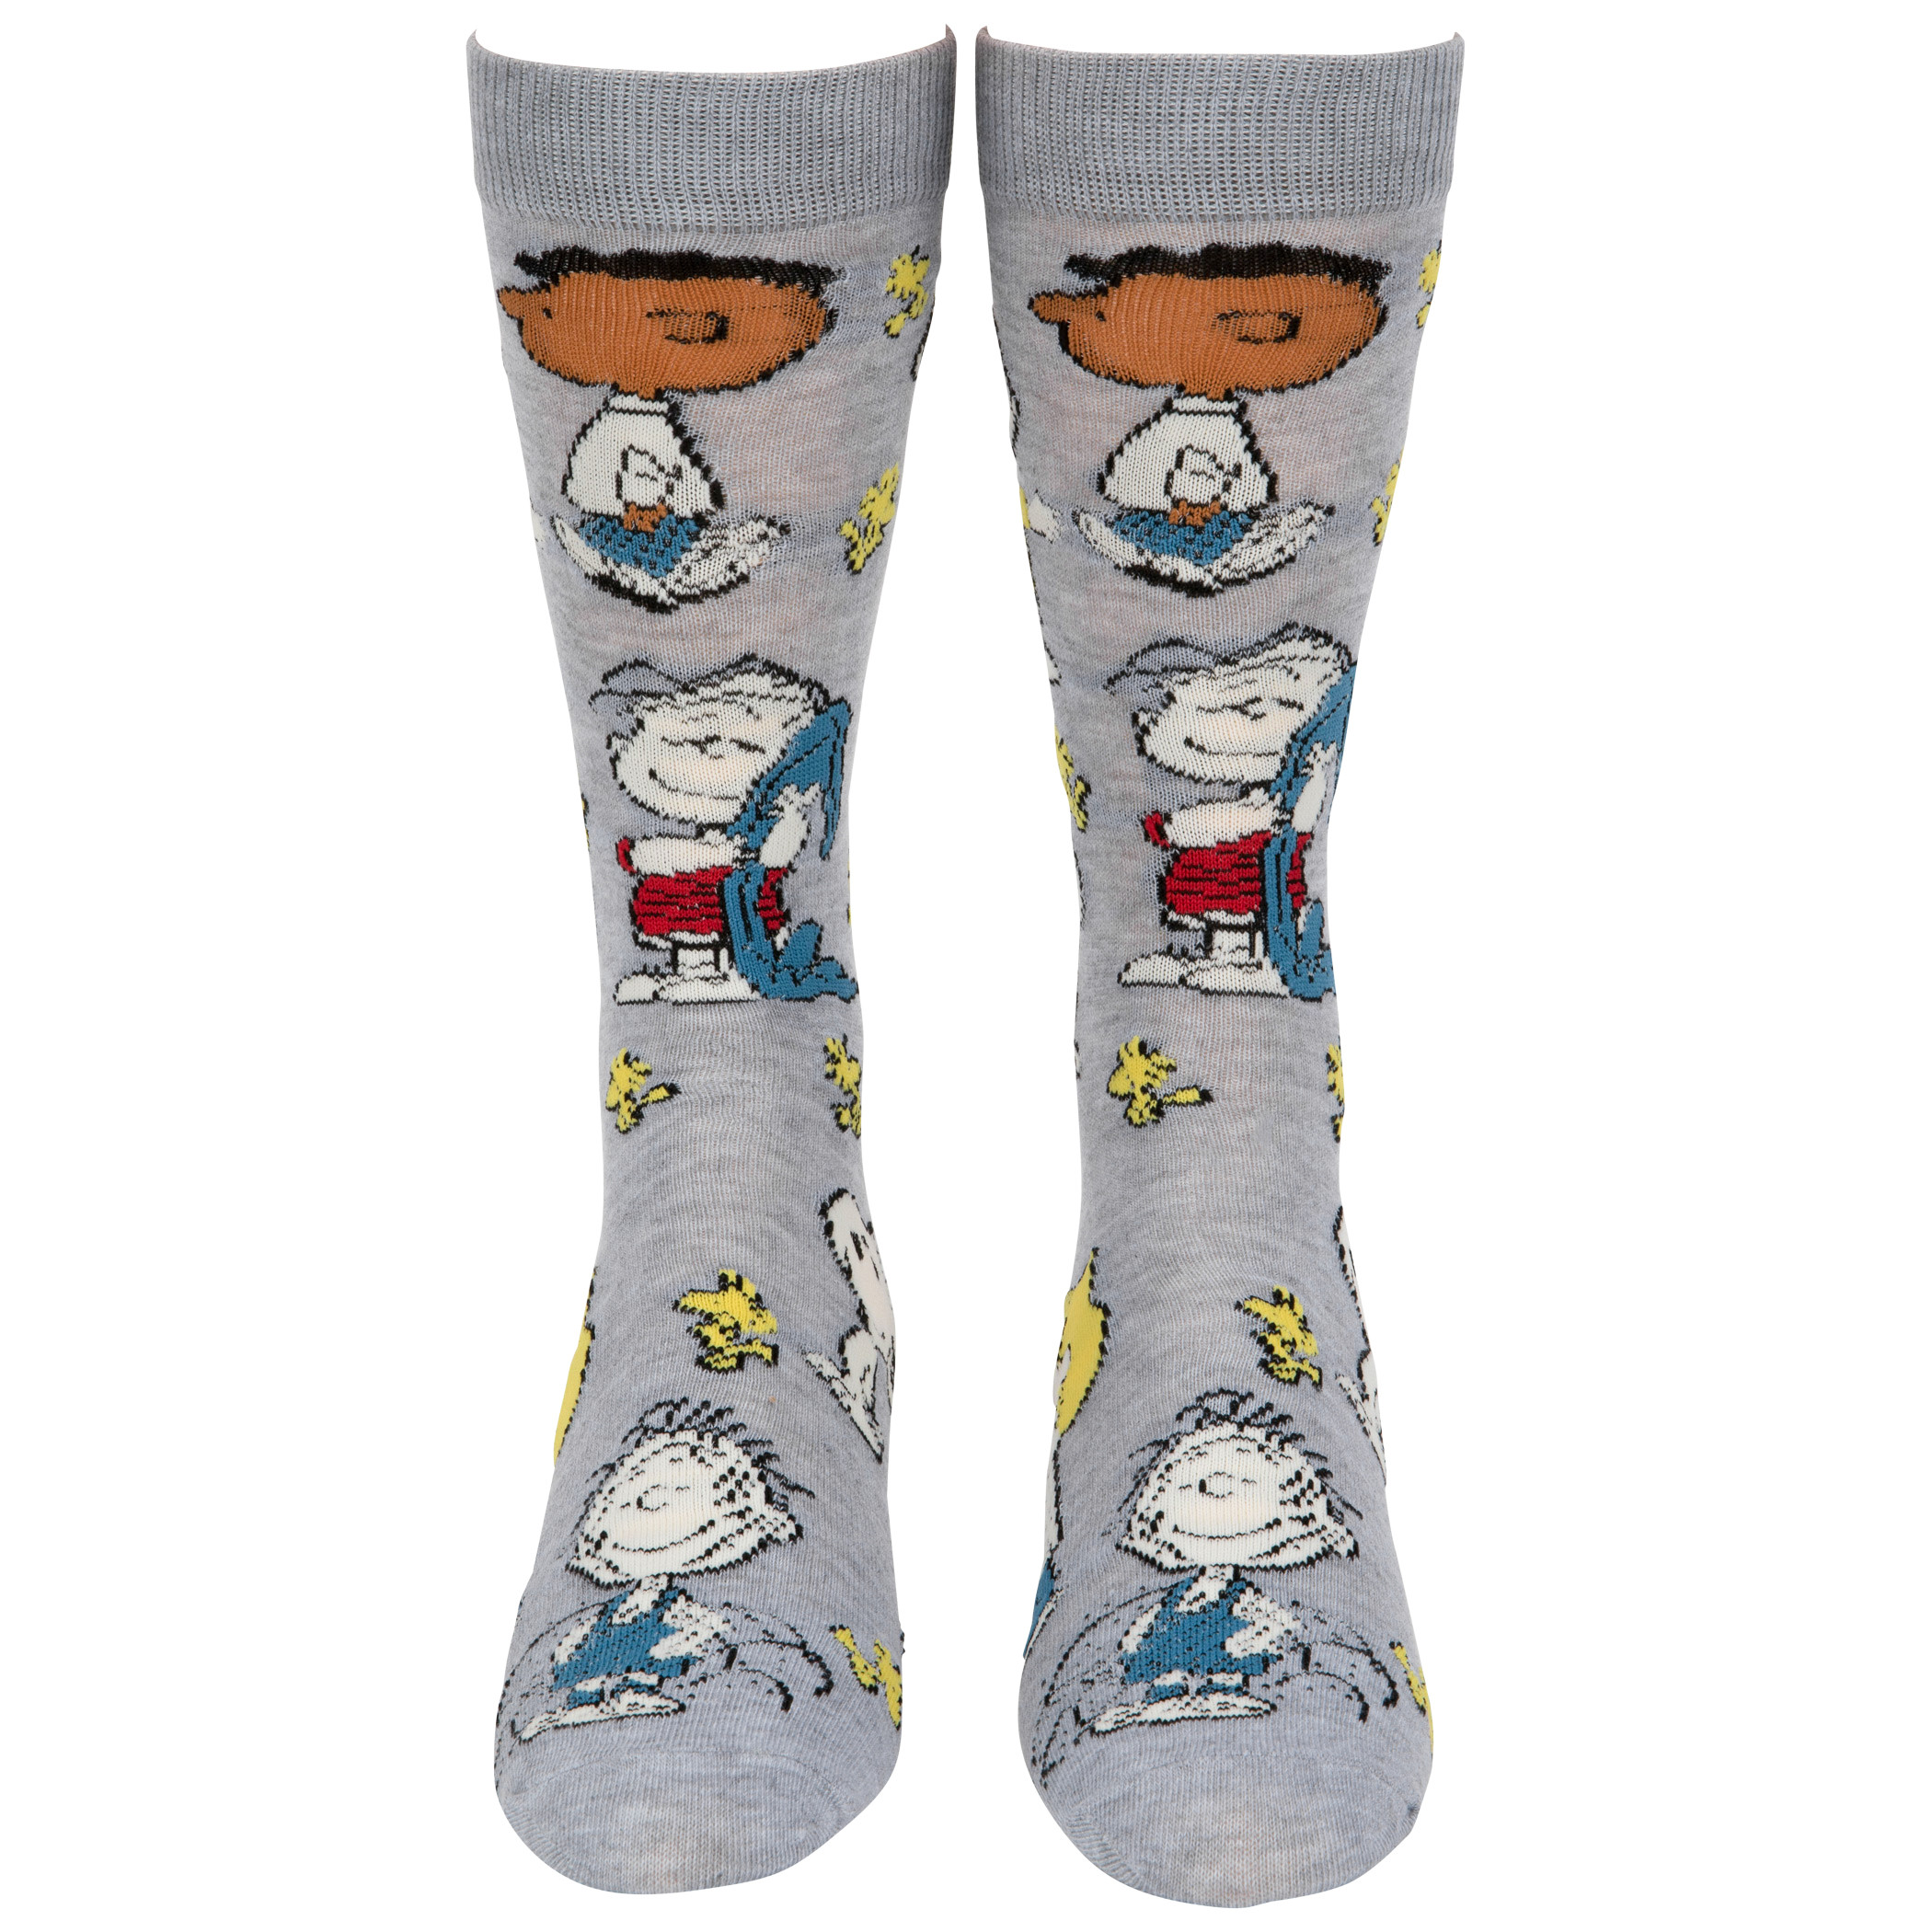 Peanuts Characters Men's Crew Socks